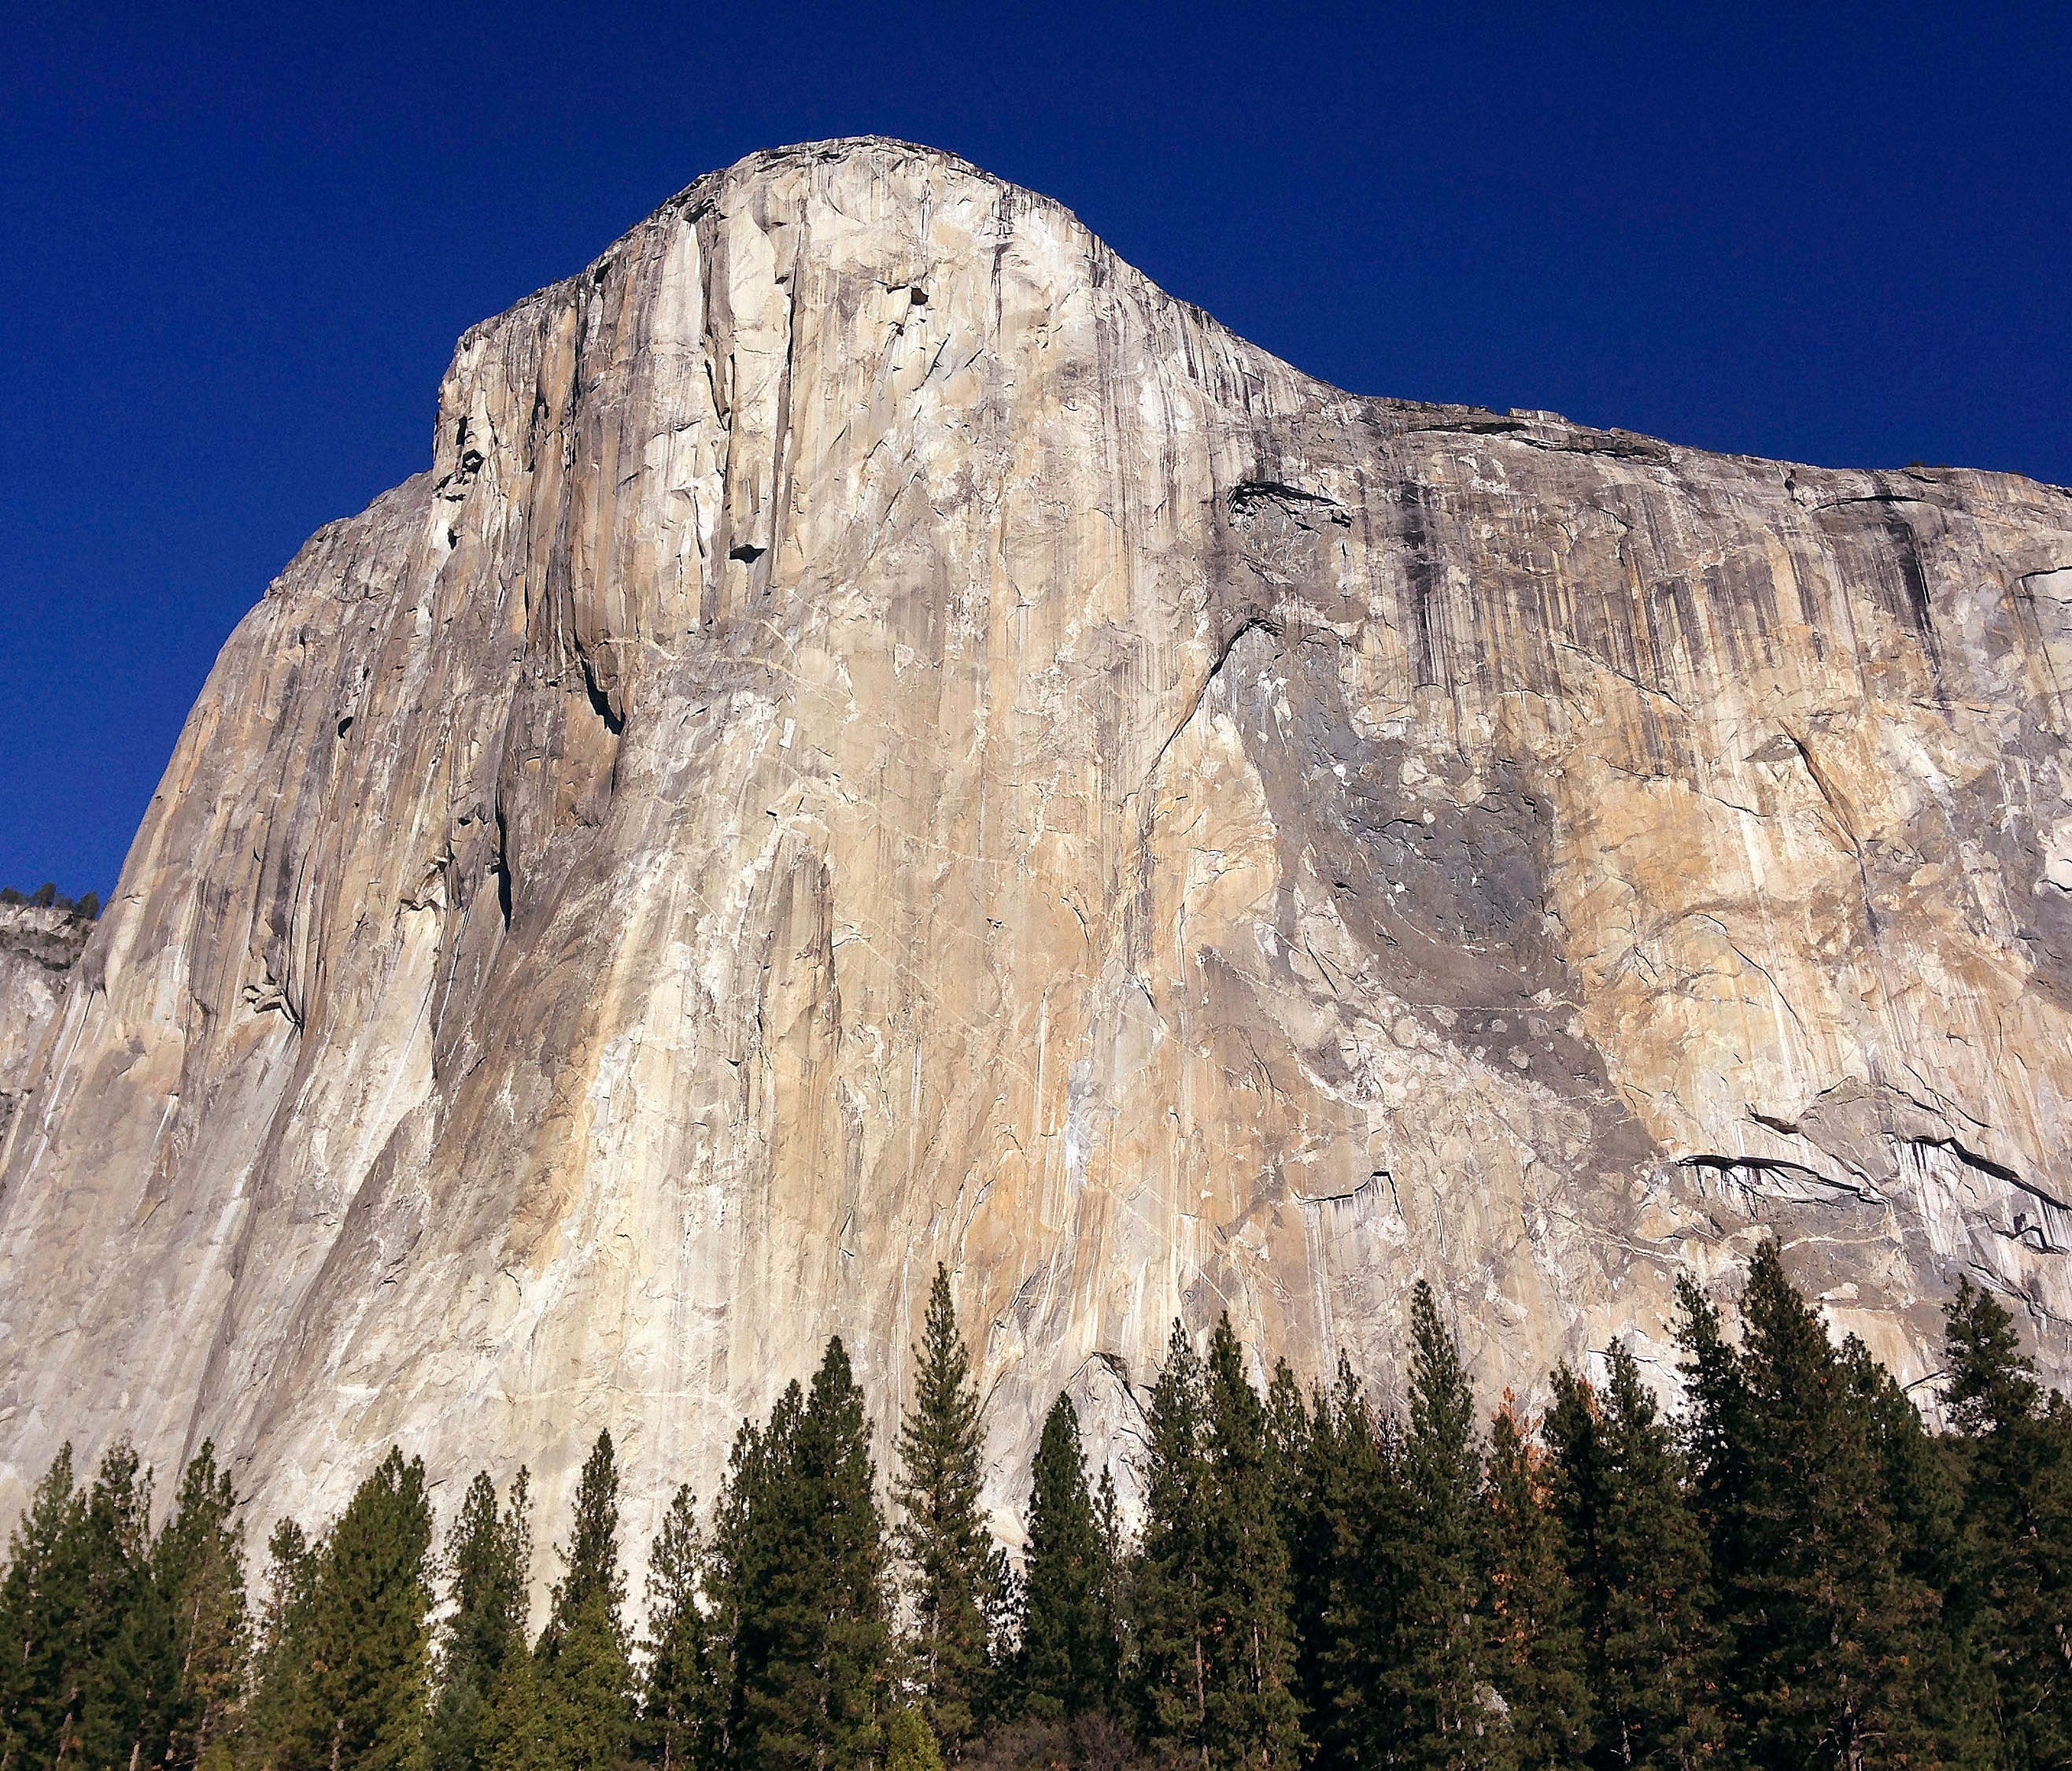 File photo shows El Capitan in Yosemite National Park, Calif., in 2015.